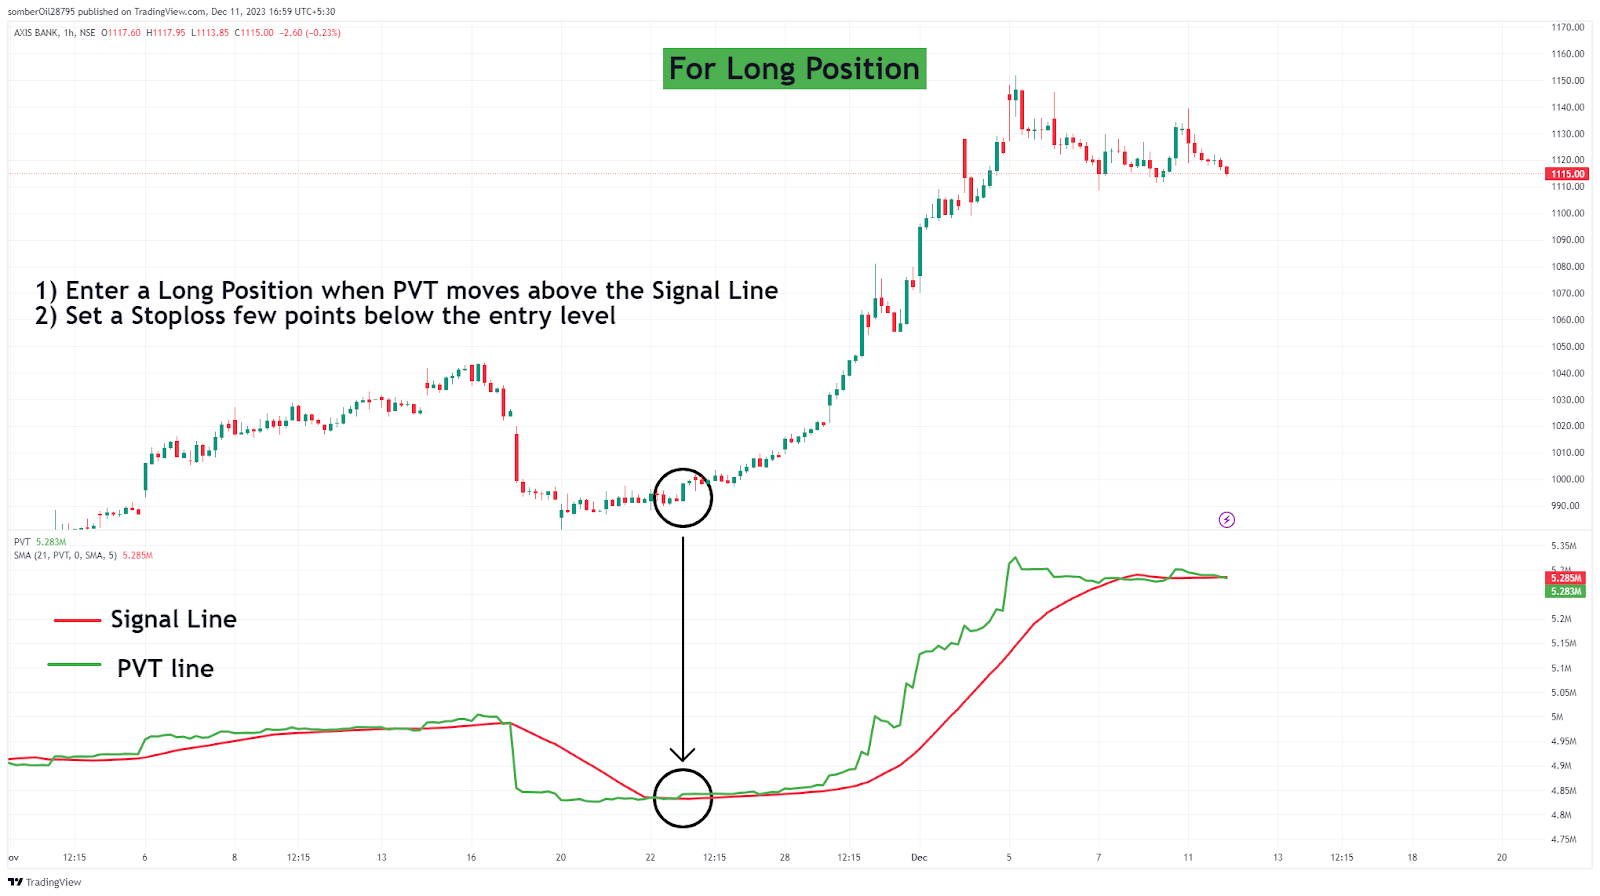 Price Volume Trend Indicator - Bullish Signal